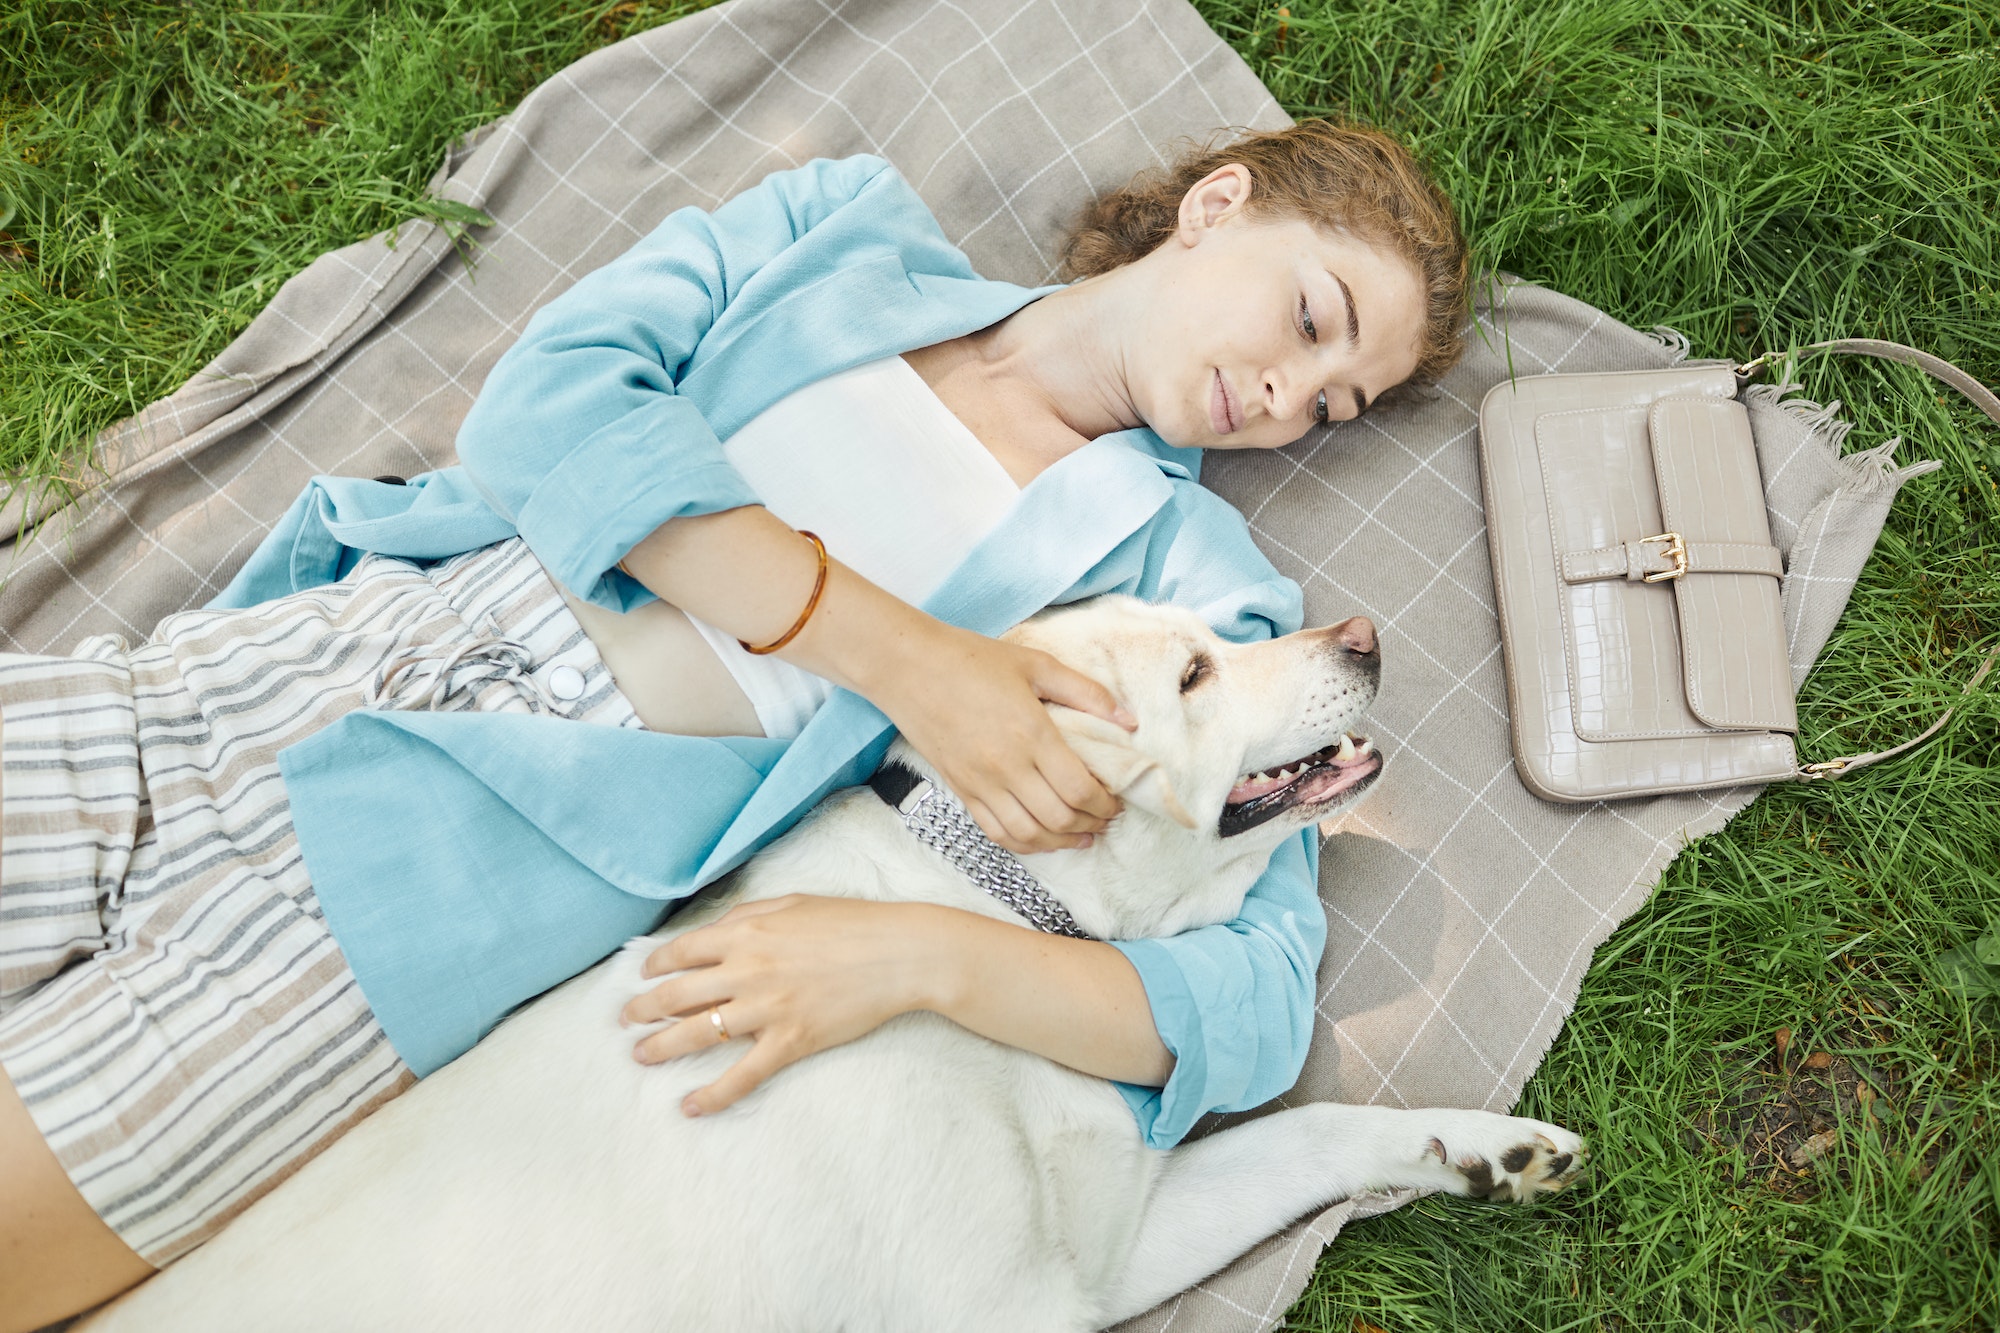 Woman Enjoying Picnic with Dog